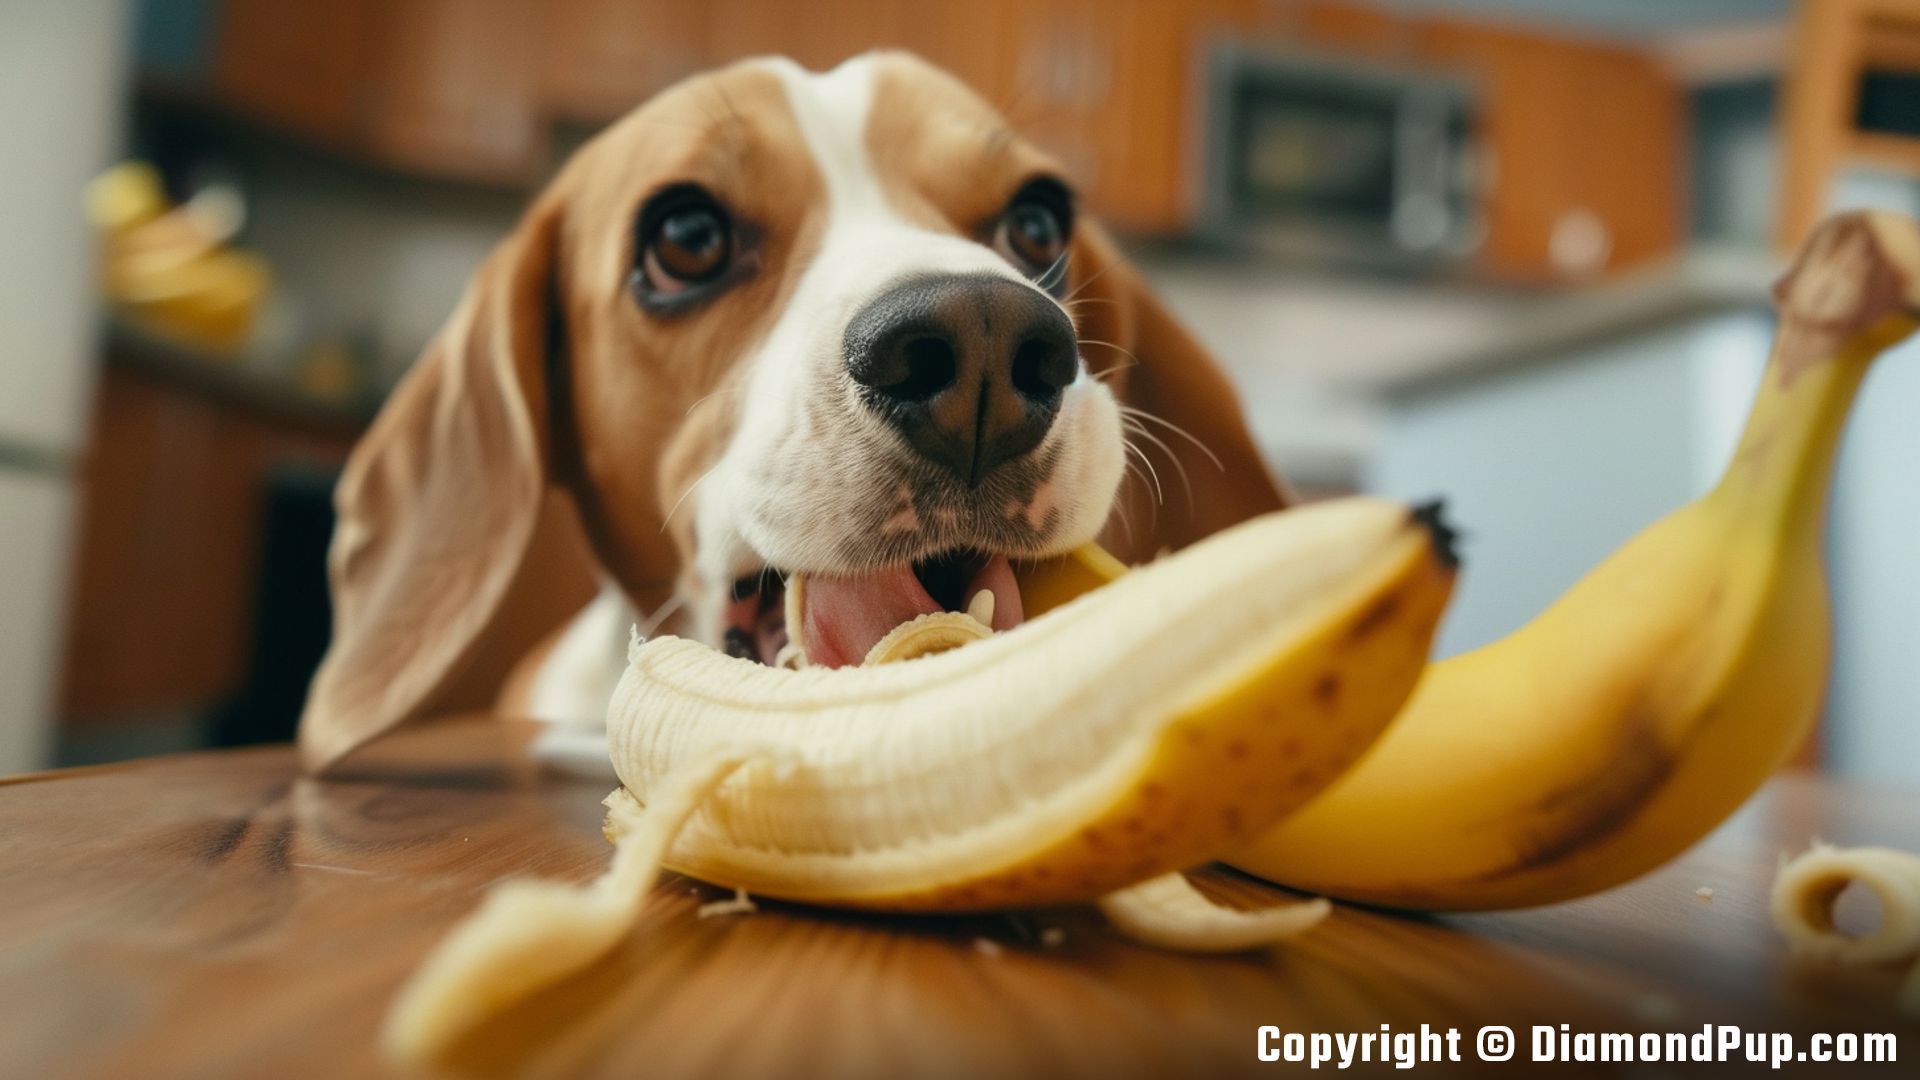 Photo of an Adorable Beagle Eating Banana